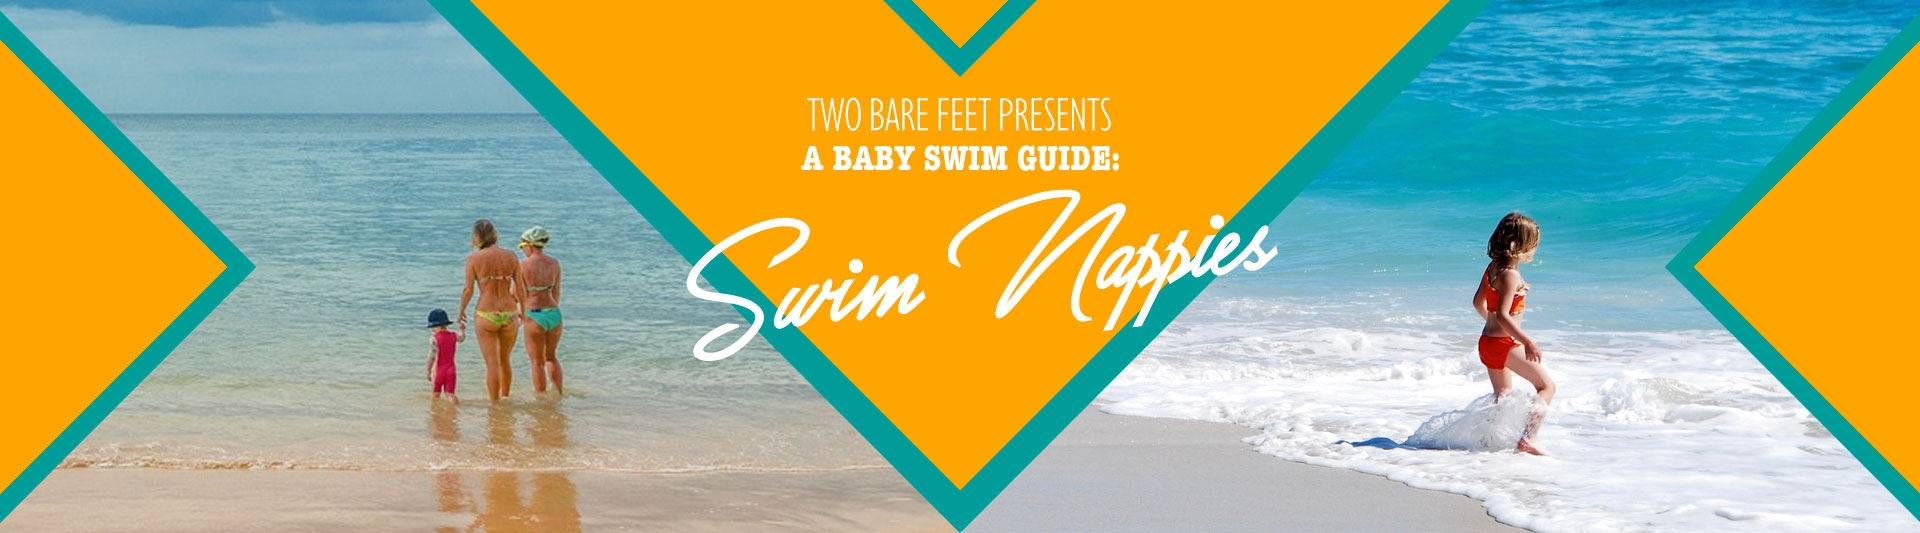 Baby Swim Nappies banner